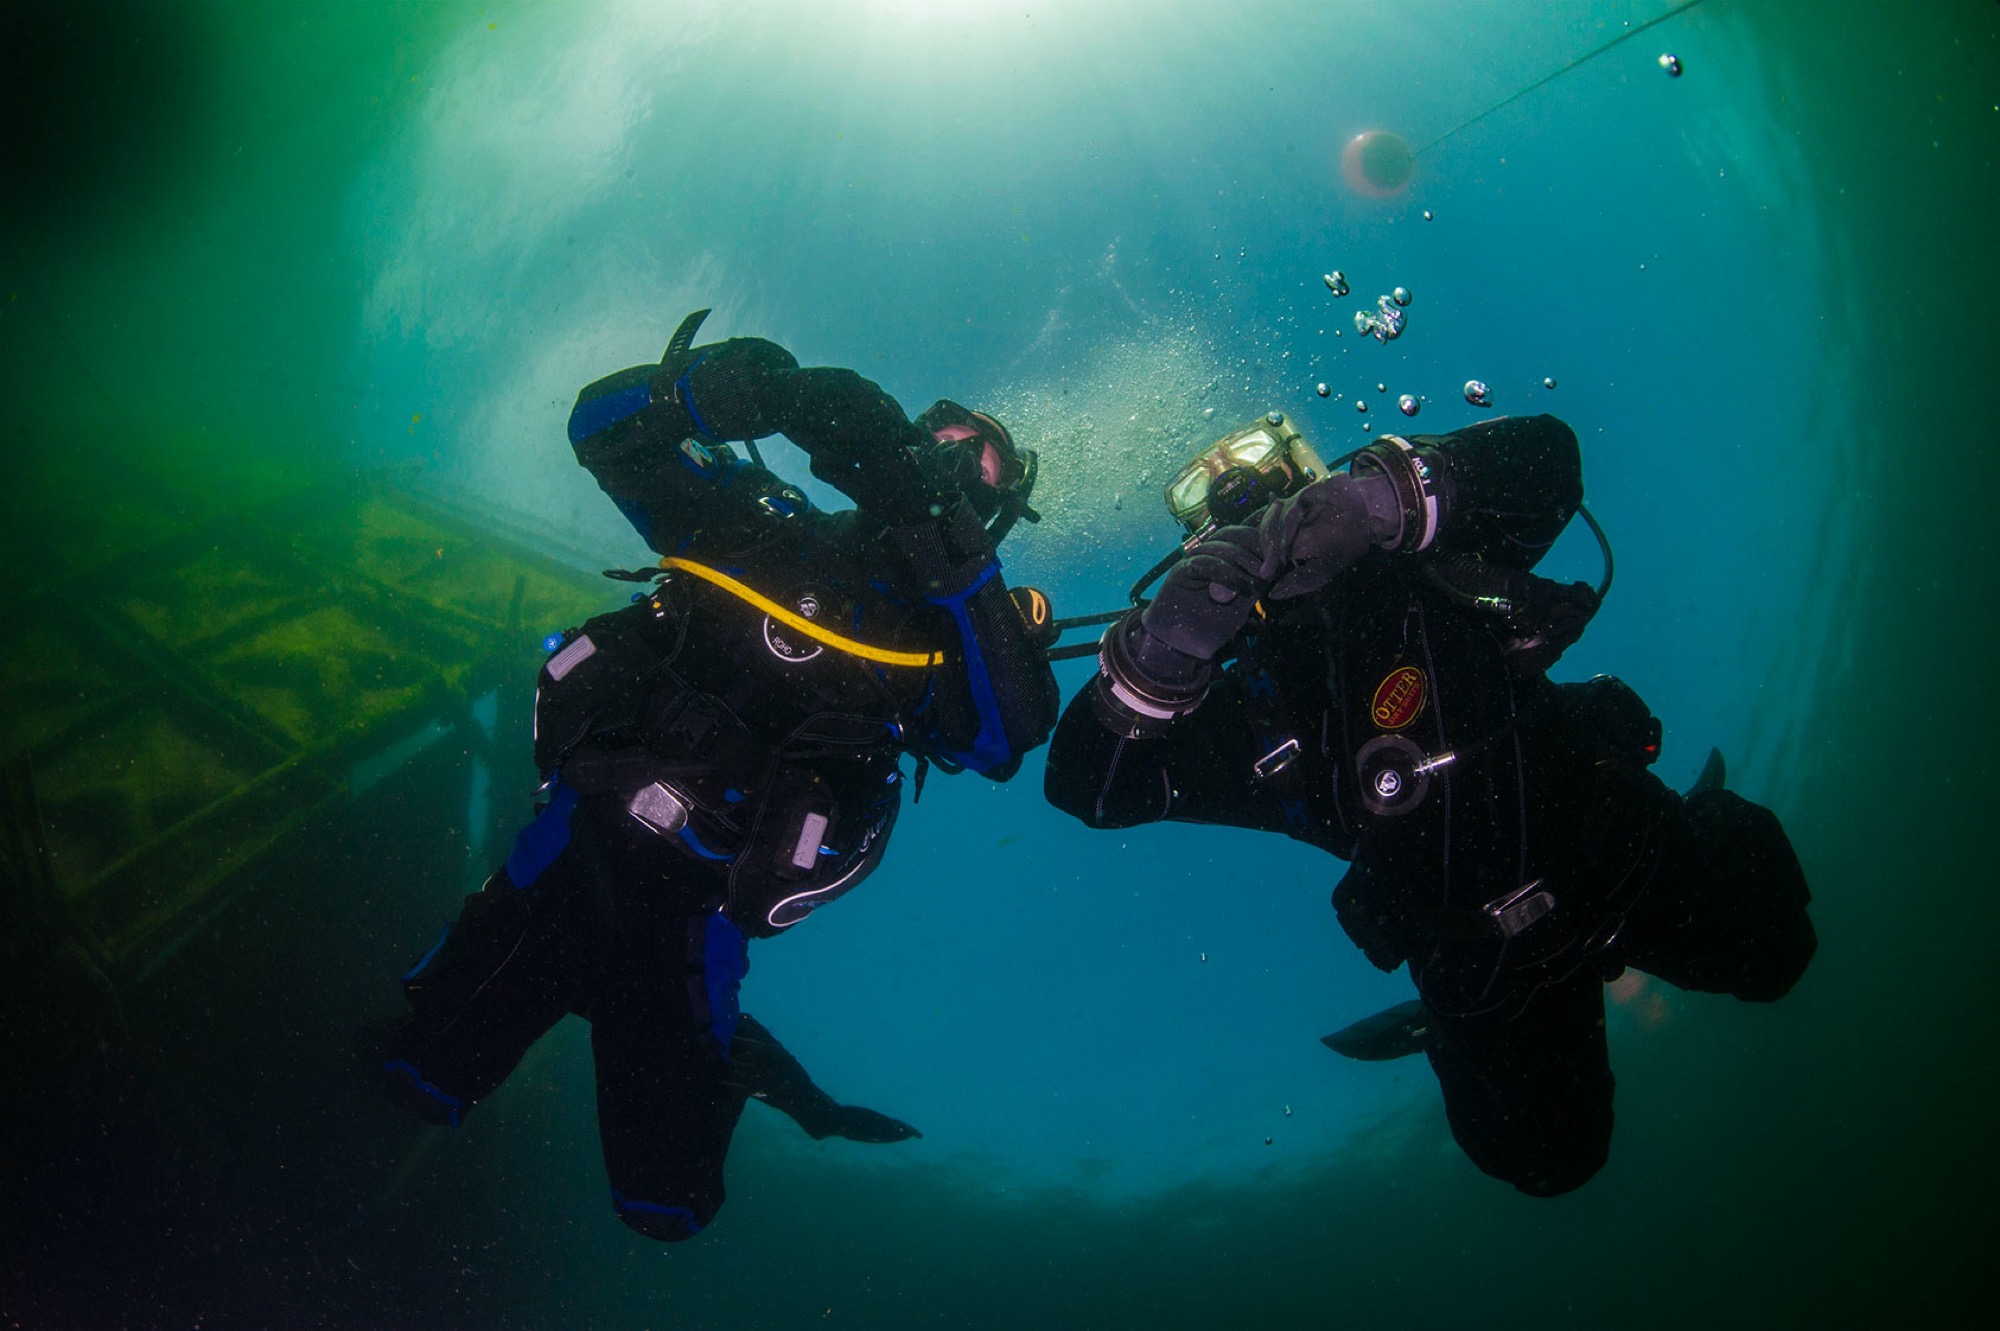 Two drysuit divers in Vobster, UK